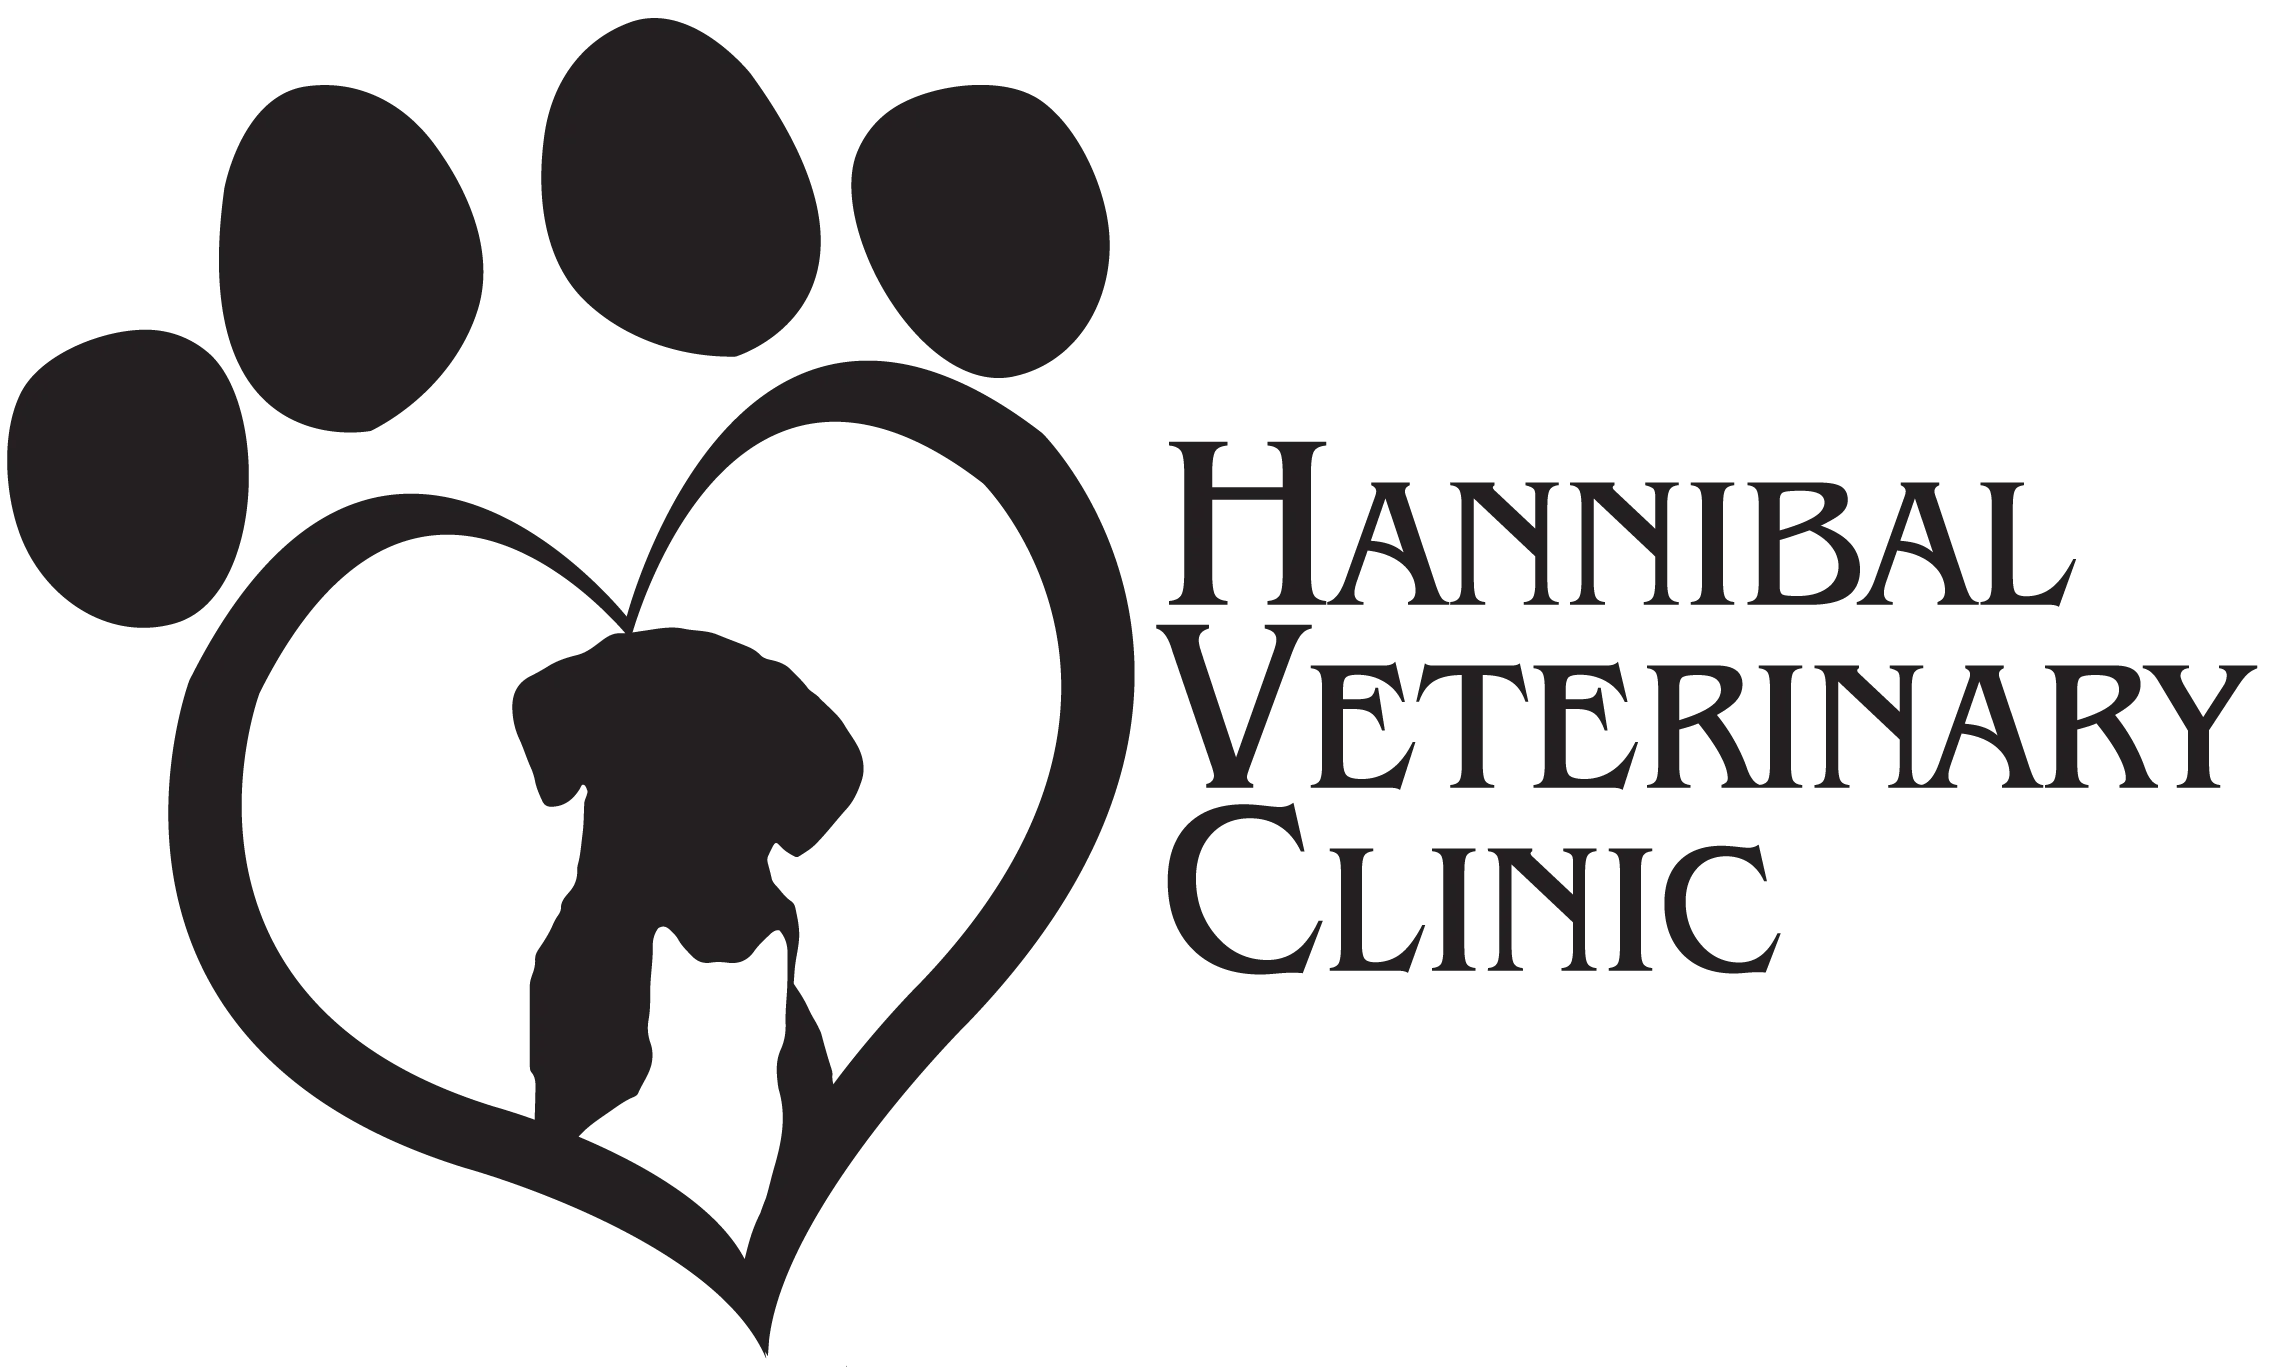 Hannibal Veterinary Clinic